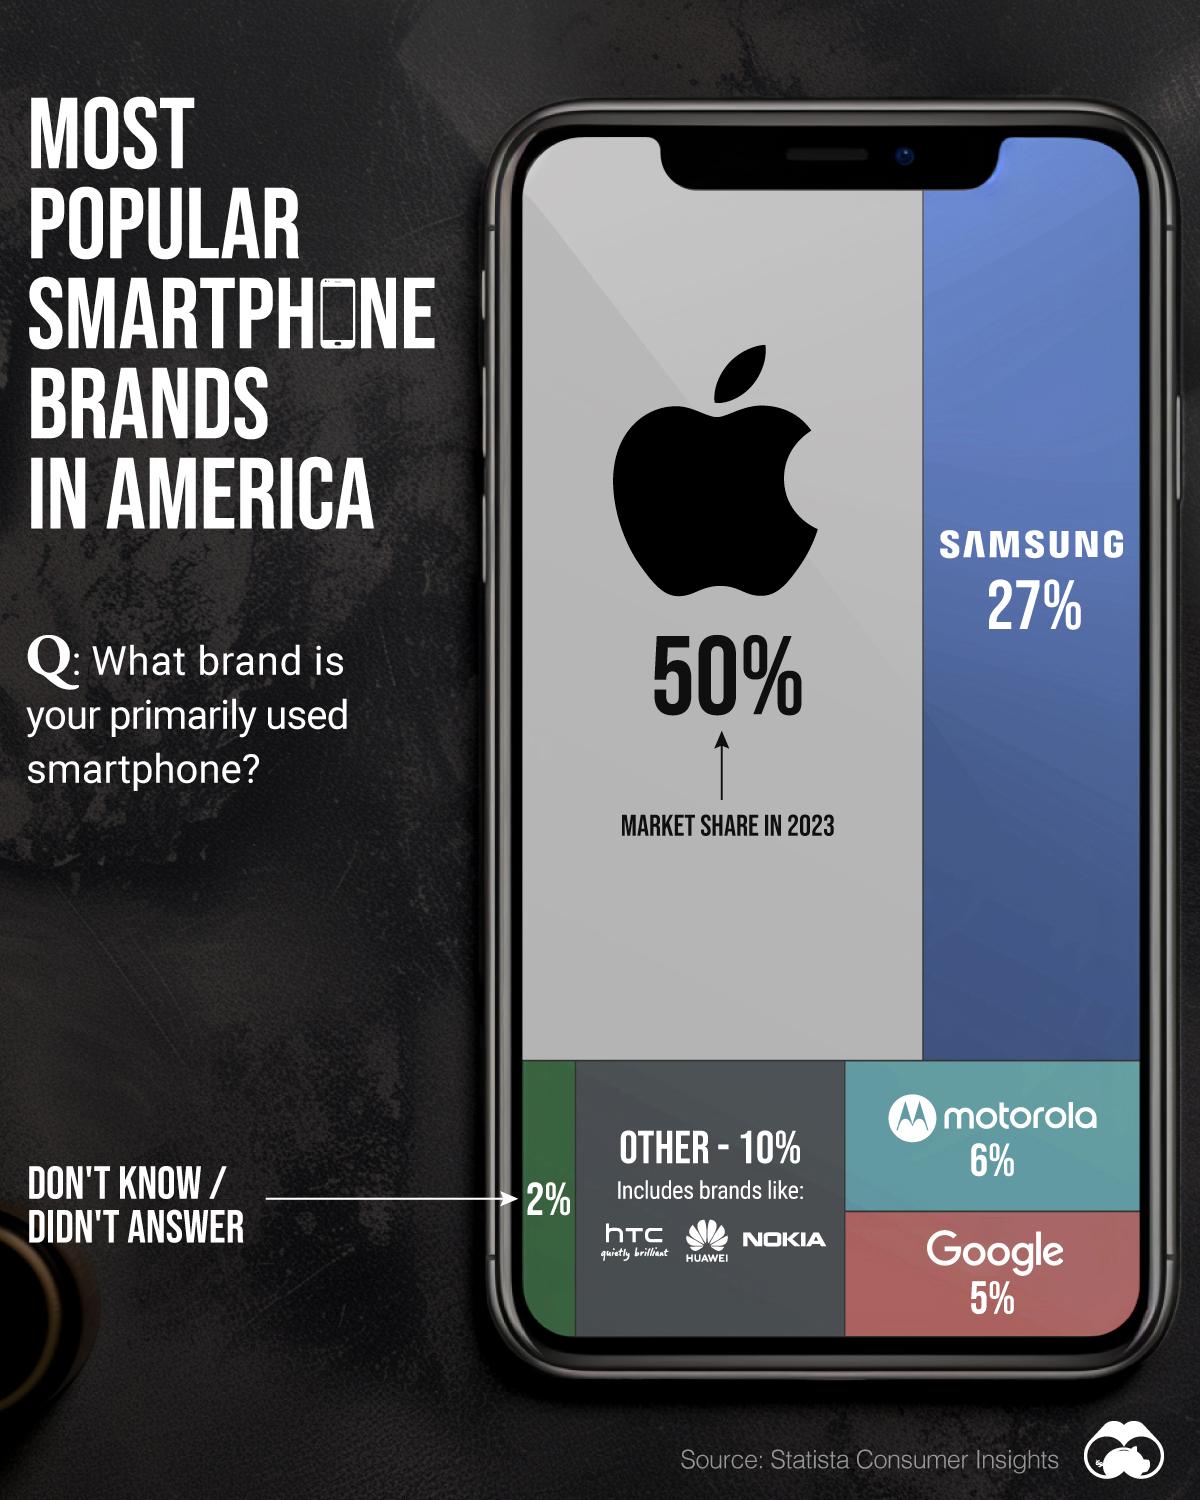 Apple is America’s Favorite Smartphone Brand